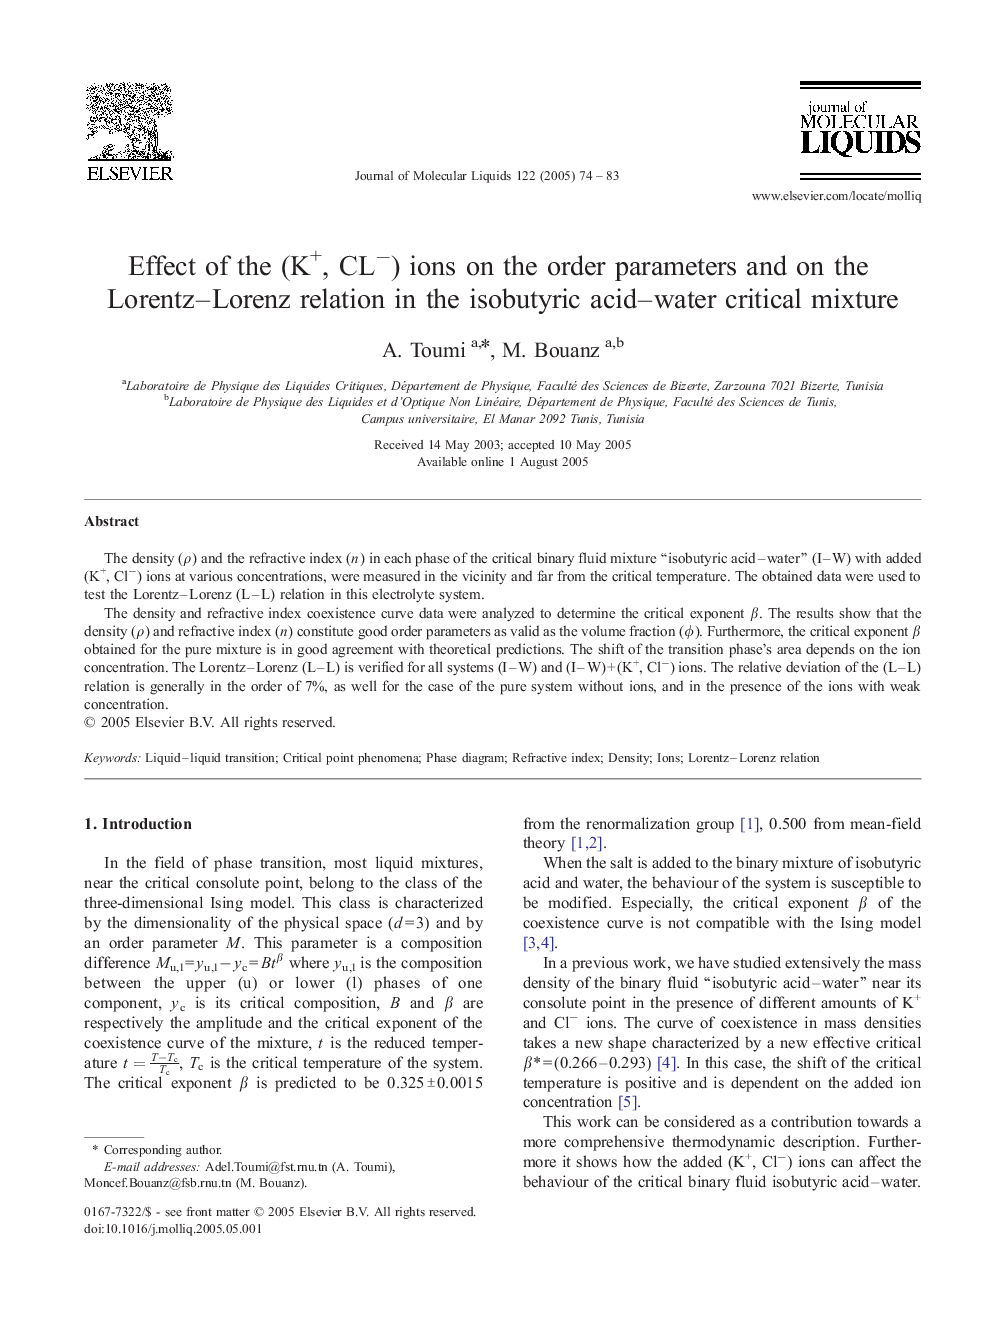 Effect of the (K+, CLâ) ions on the order parameters and on the Lorentz-Lorenz relation in the isobutyric acid-water critical mixture